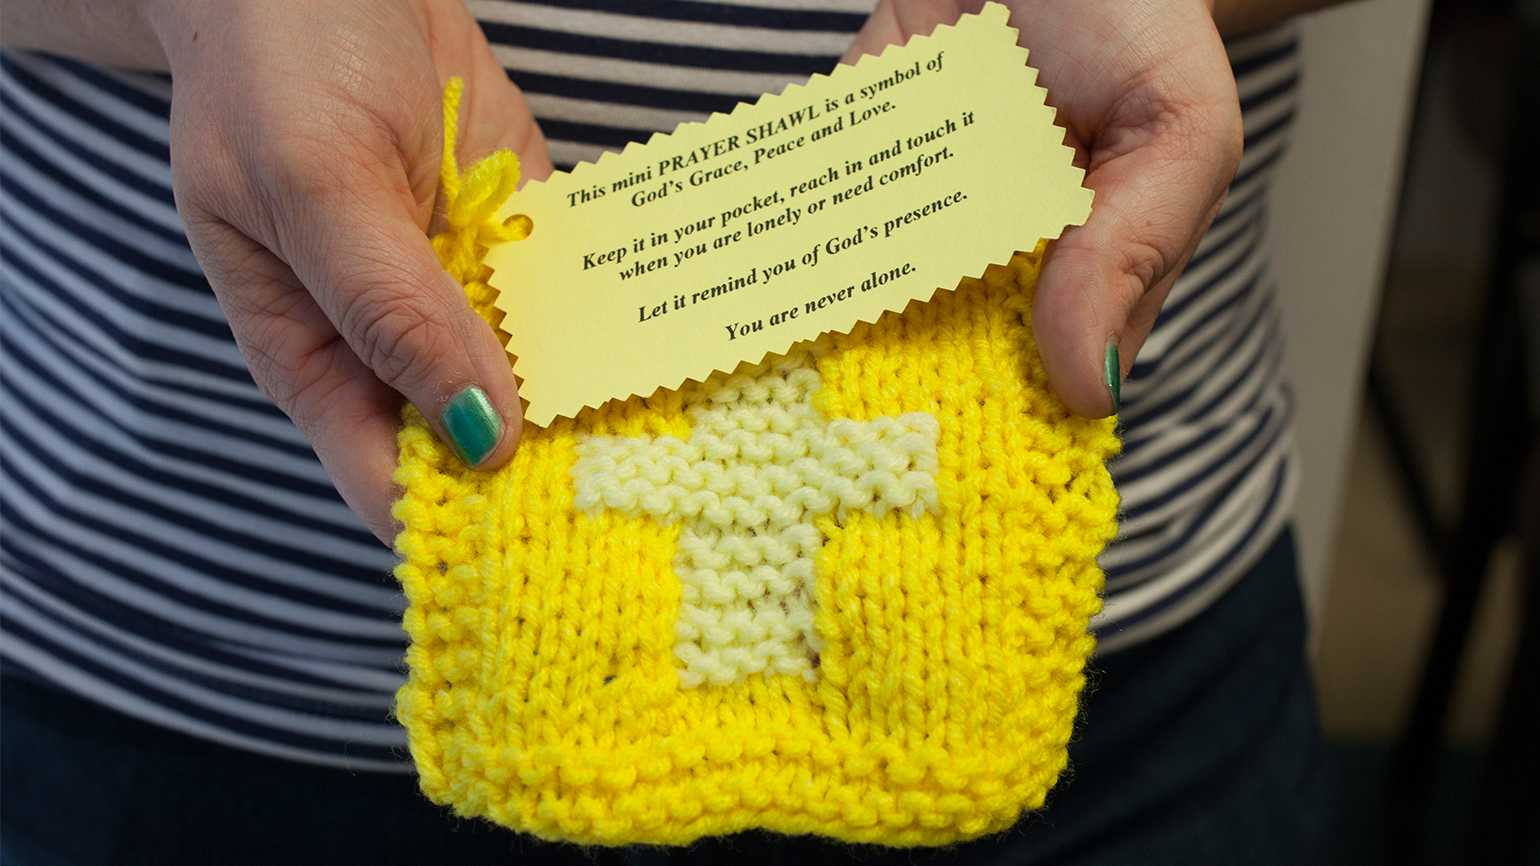 Prayer Shawl Knit Pattern A Small Gift With A Big Impact Guideposts